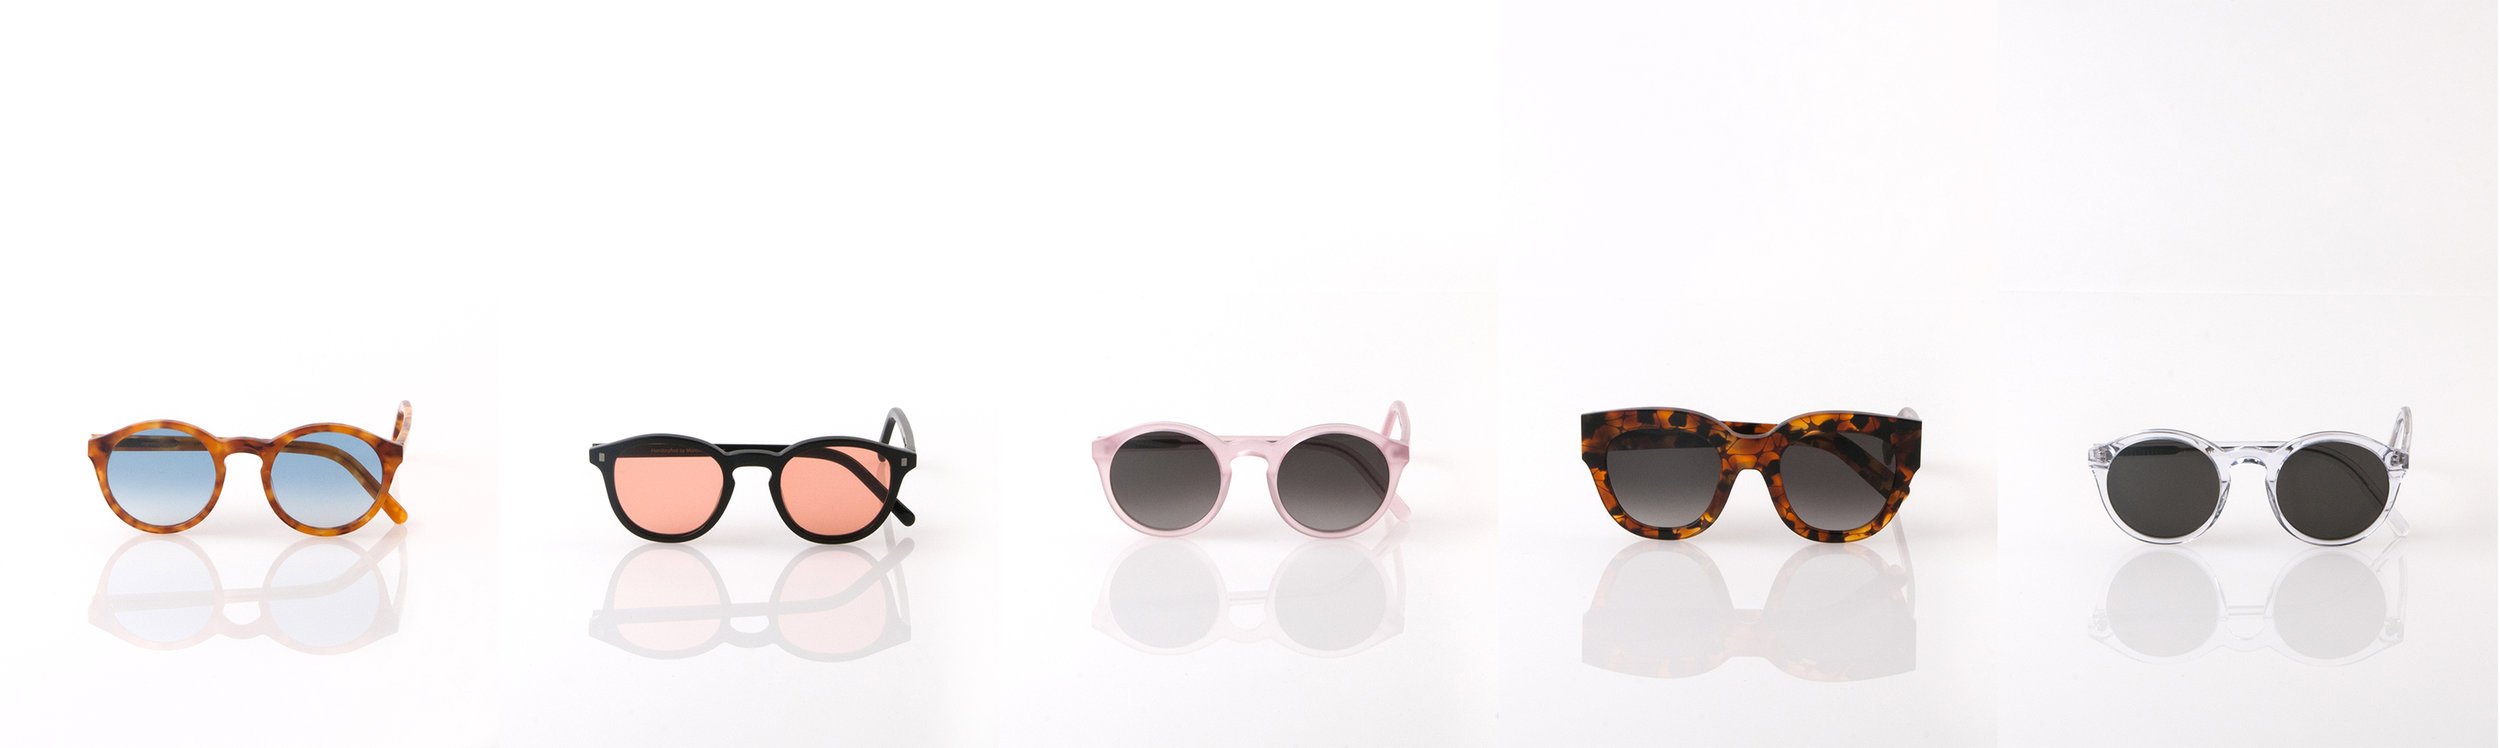 Bret-Woodard-Sunglasses.jpg